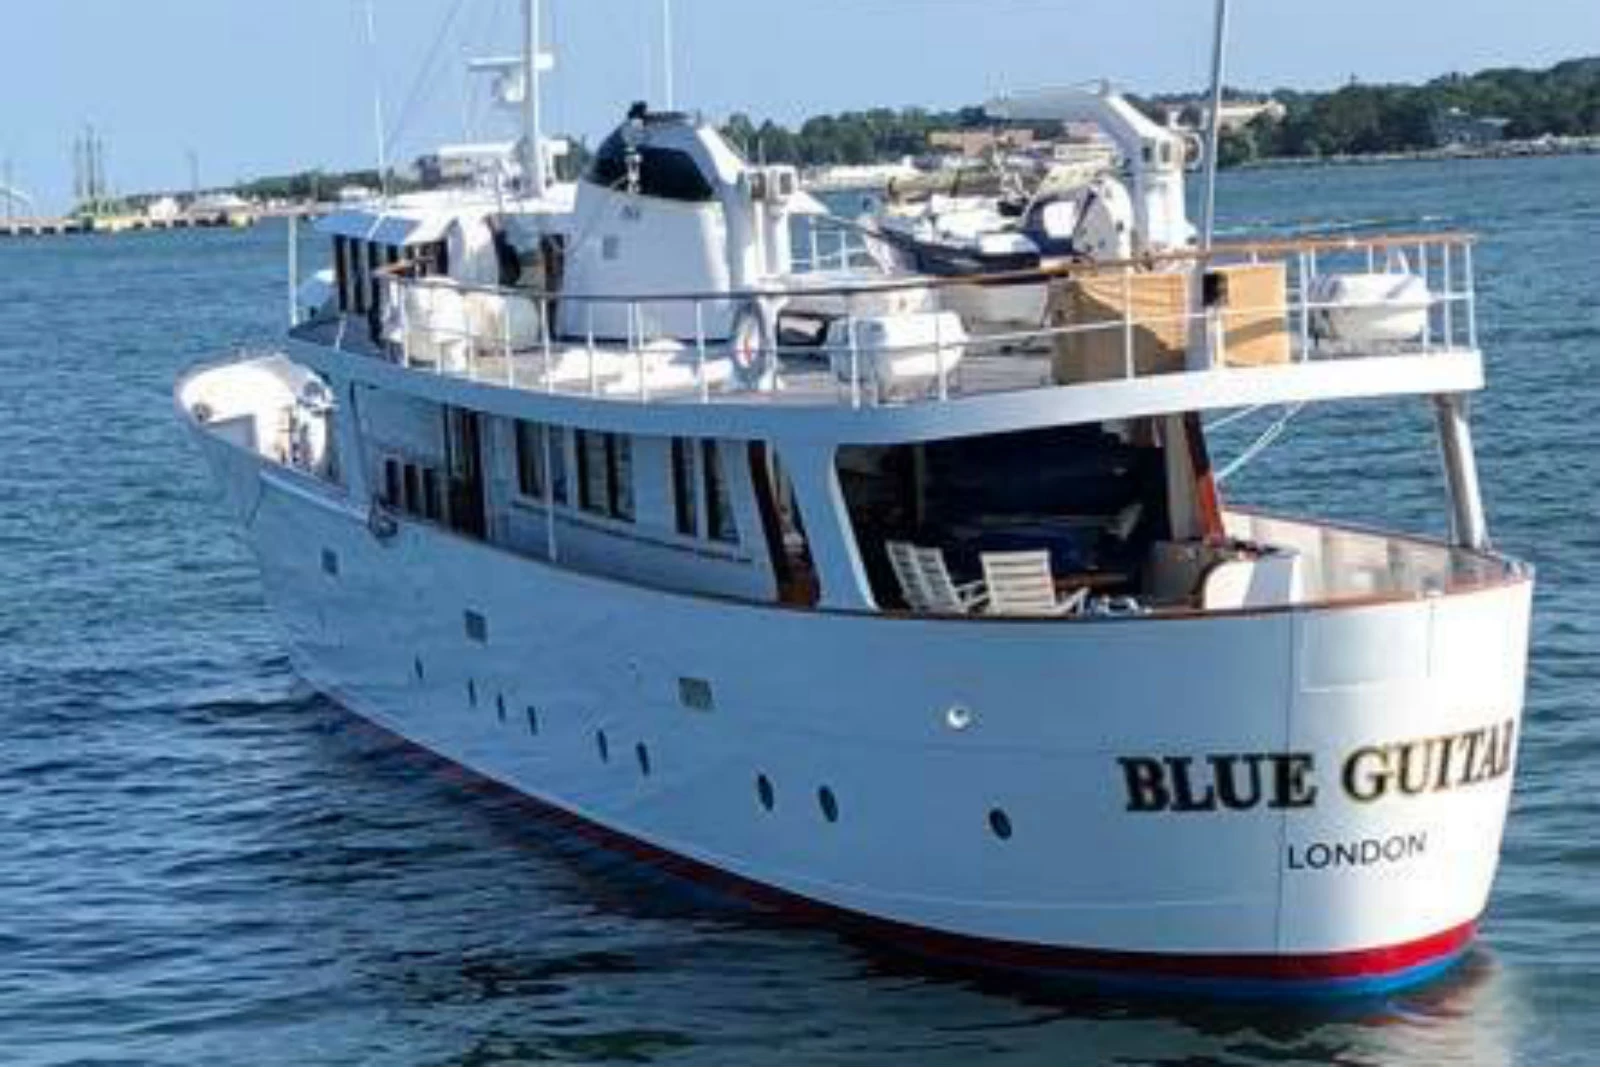 blue guitar london yacht